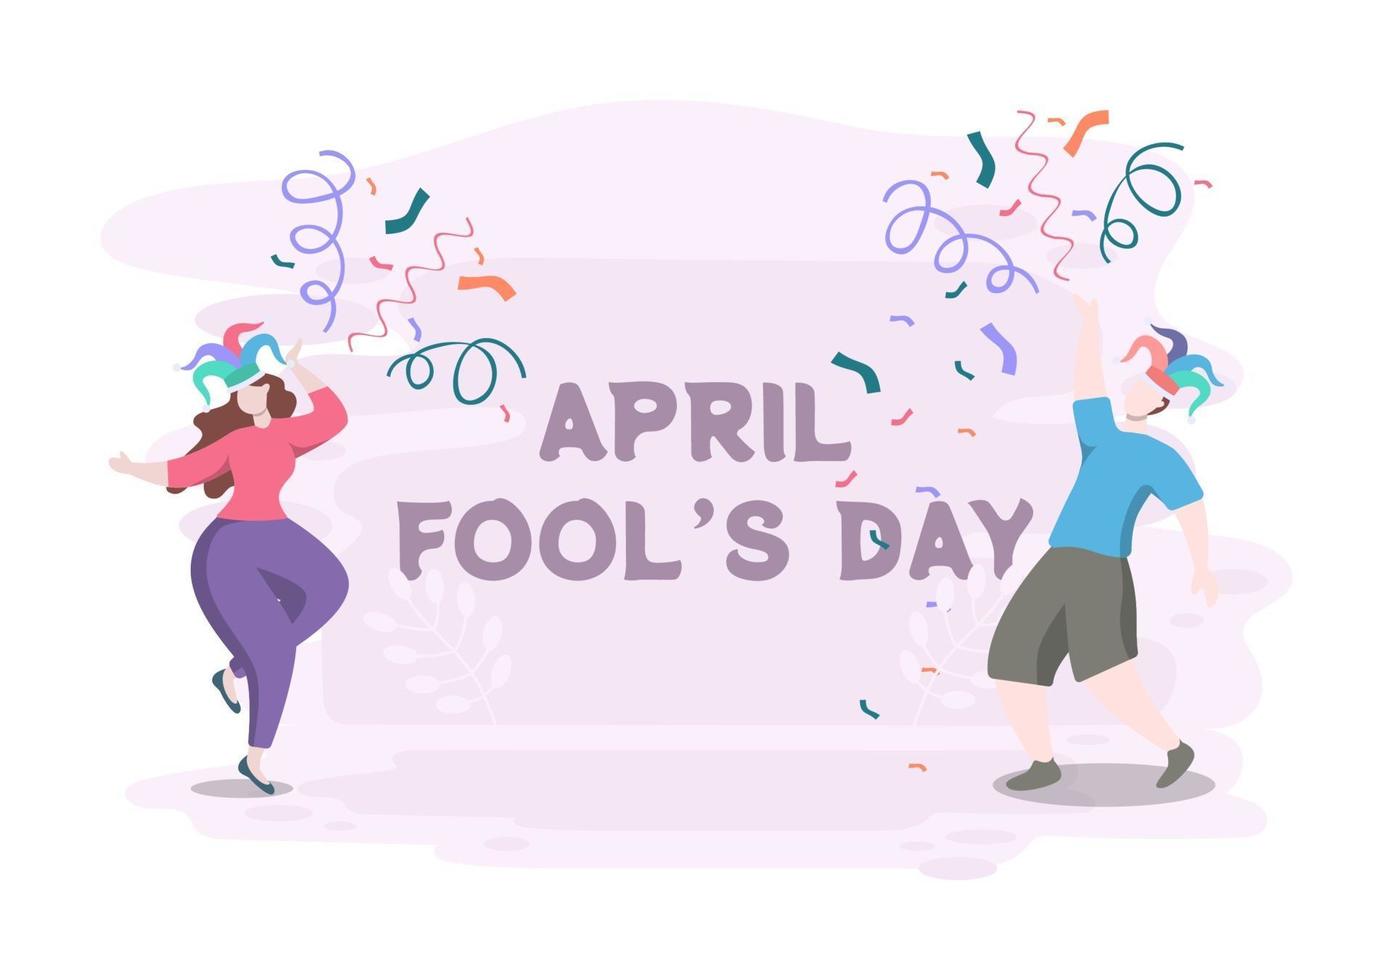 Celebration Happy April Fool's Day Wearing a Jester Hat Background Design Concept. Vector Illustration